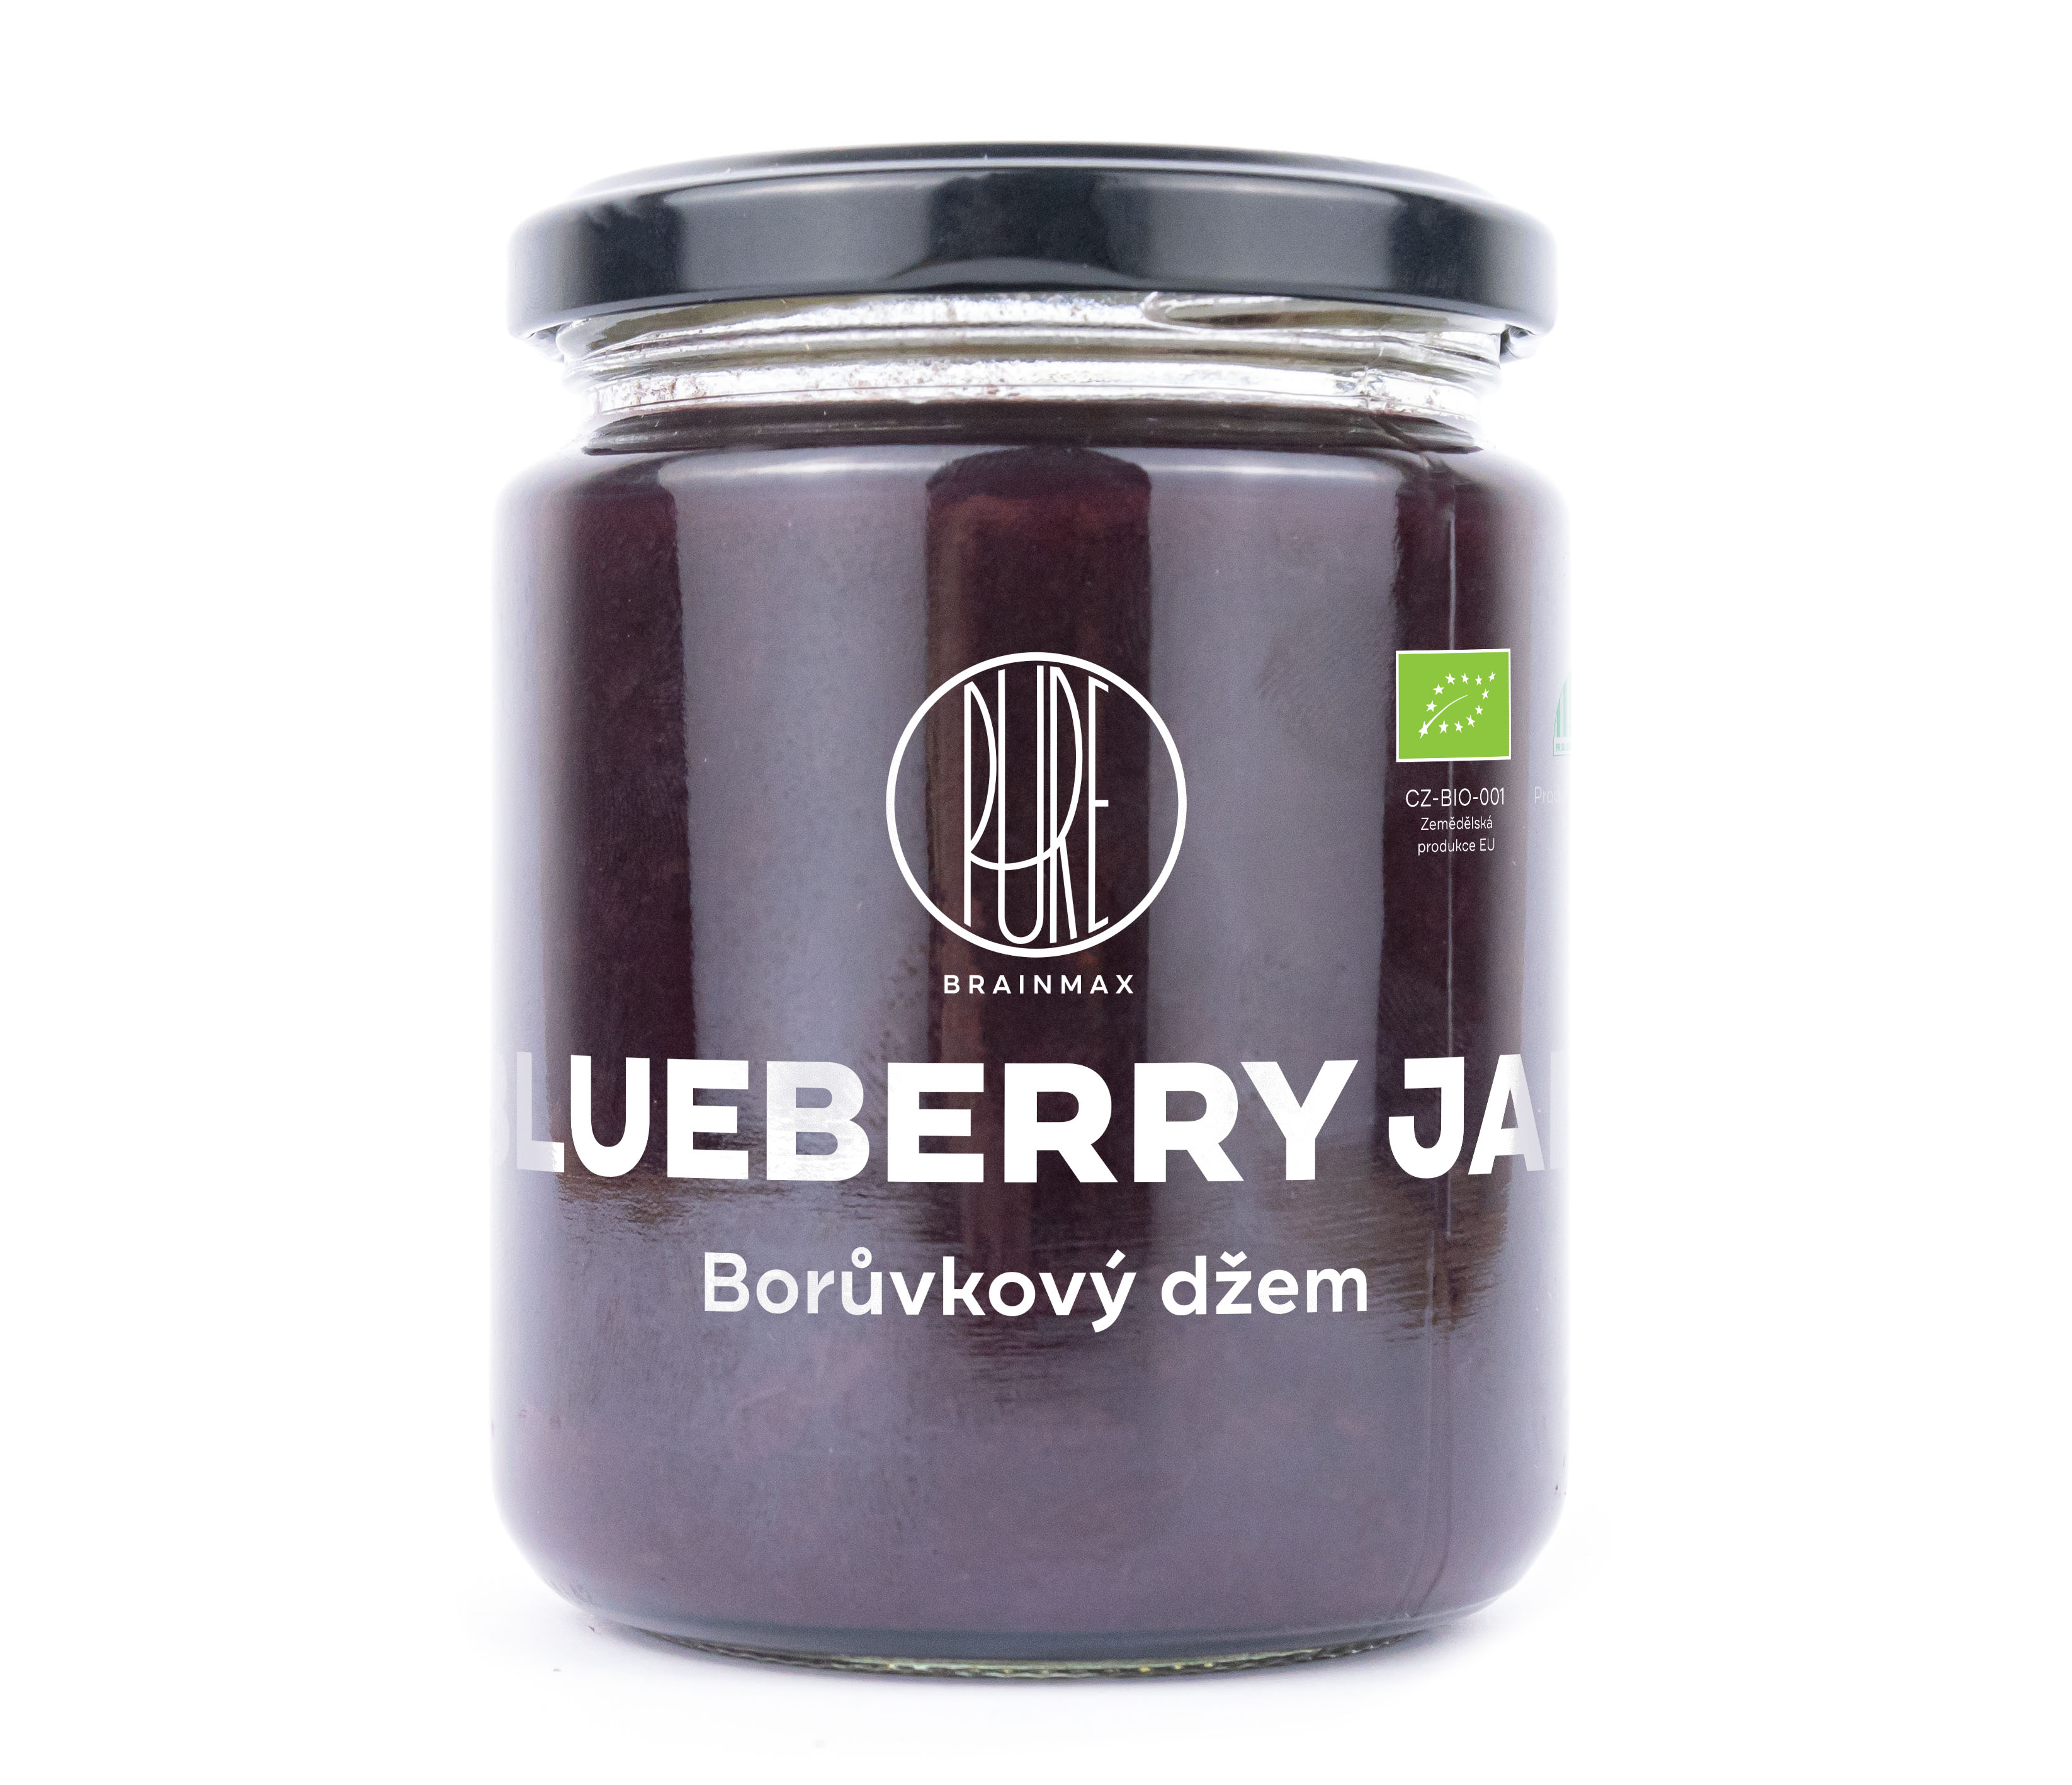 Levně BrainMax Pure Blueberry Jam, Džem Borůvka, BIO, 270g *CZ-BIO-001 certifikát